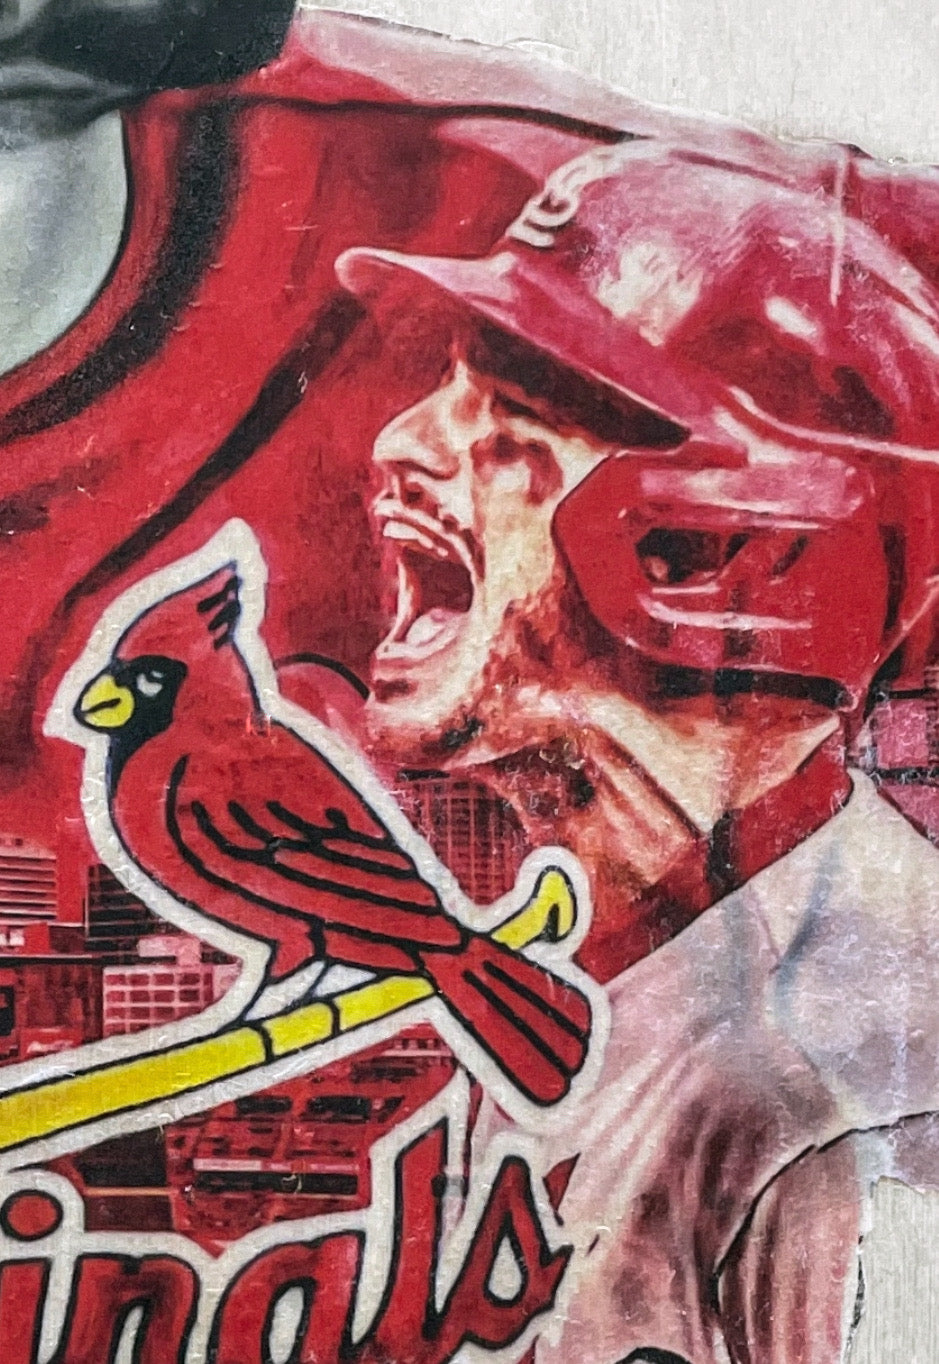 Nolan Arenado St. Louis Cardinals Poster for Sale by becca21